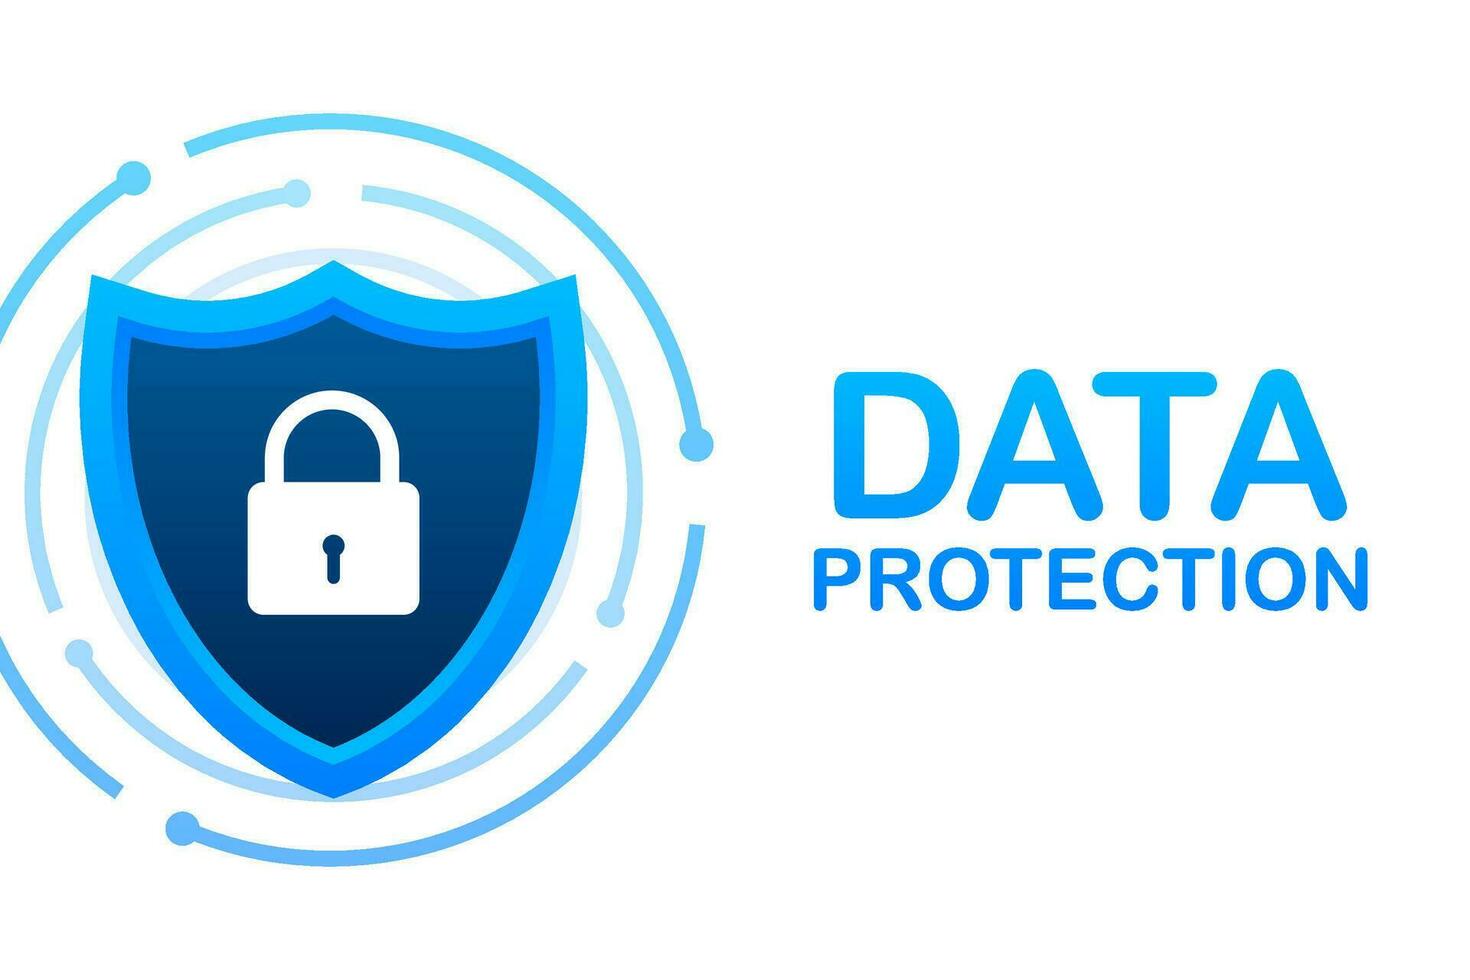 Data protection data center. Internet technology. Information technology. Vector stock illustration